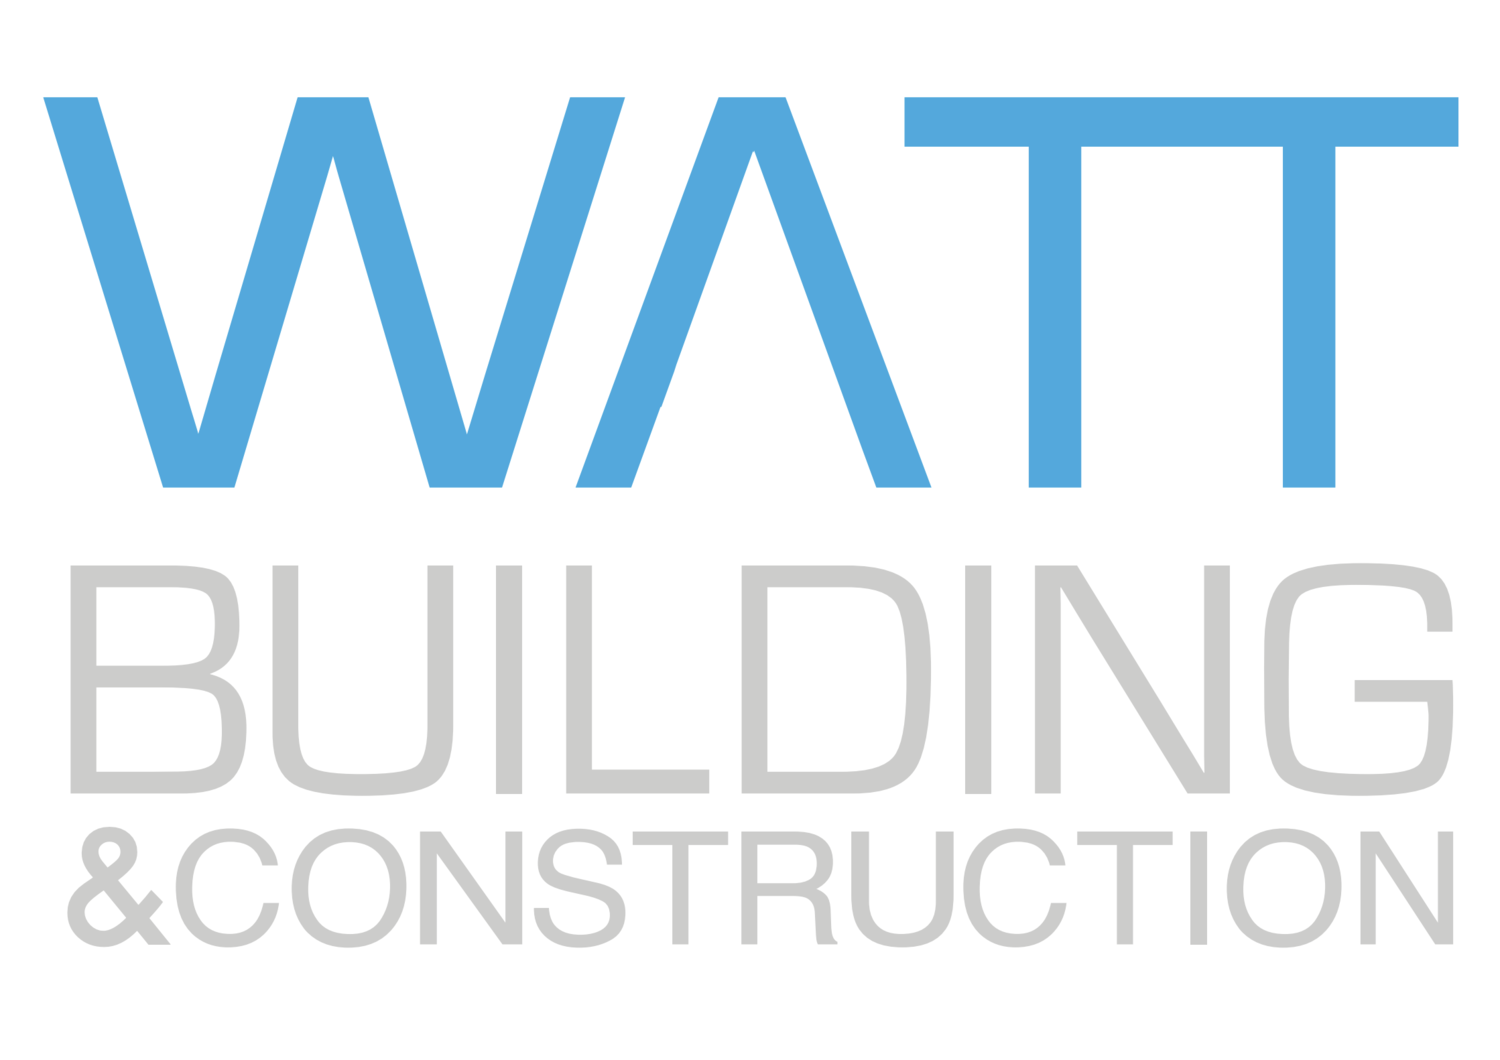 Watt Building & Co